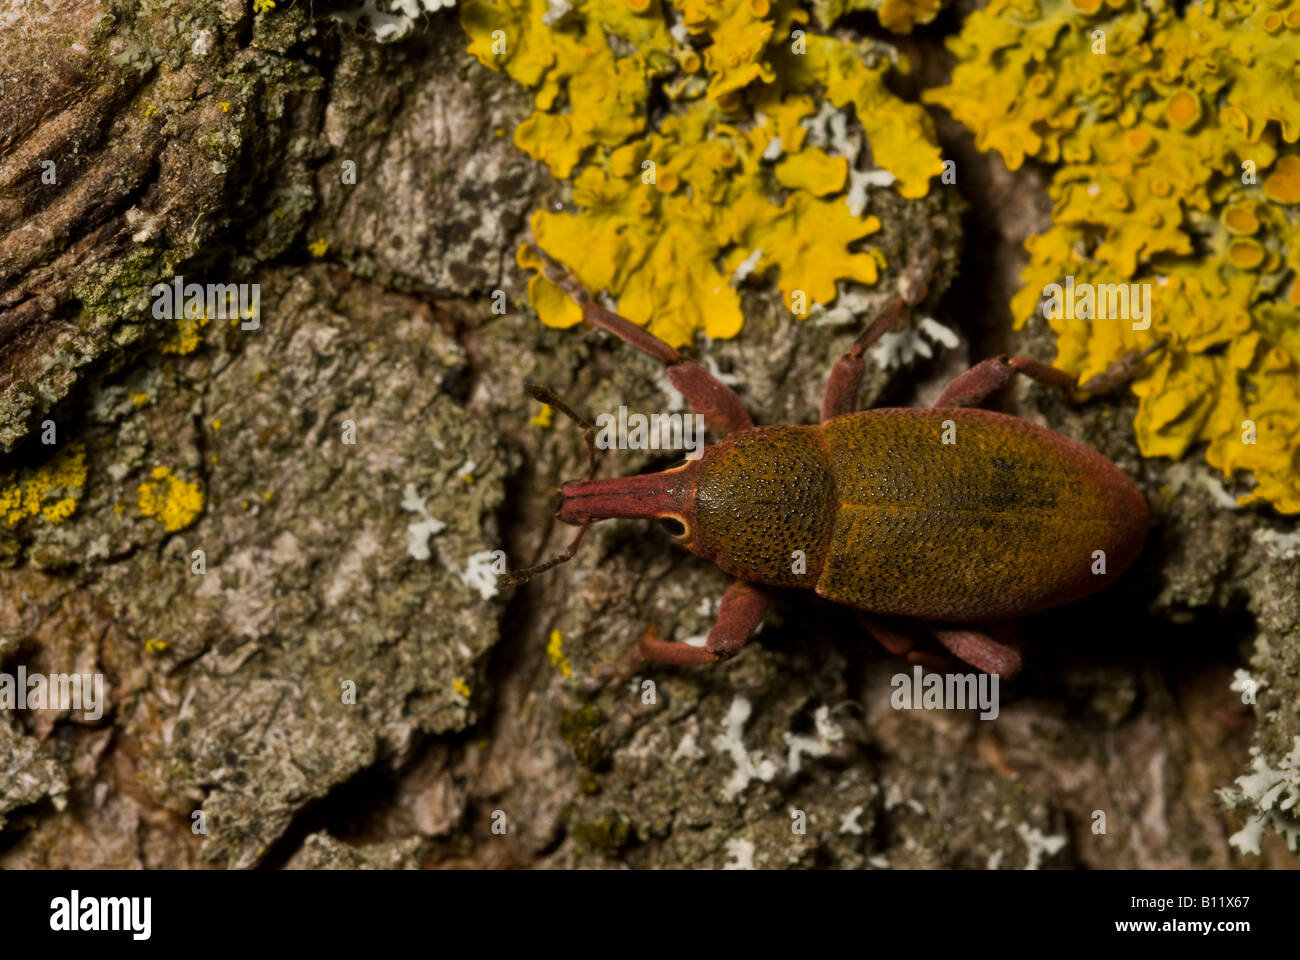 Lixomorphus Algirus, Curculionidae Coleoptera Stockfoto